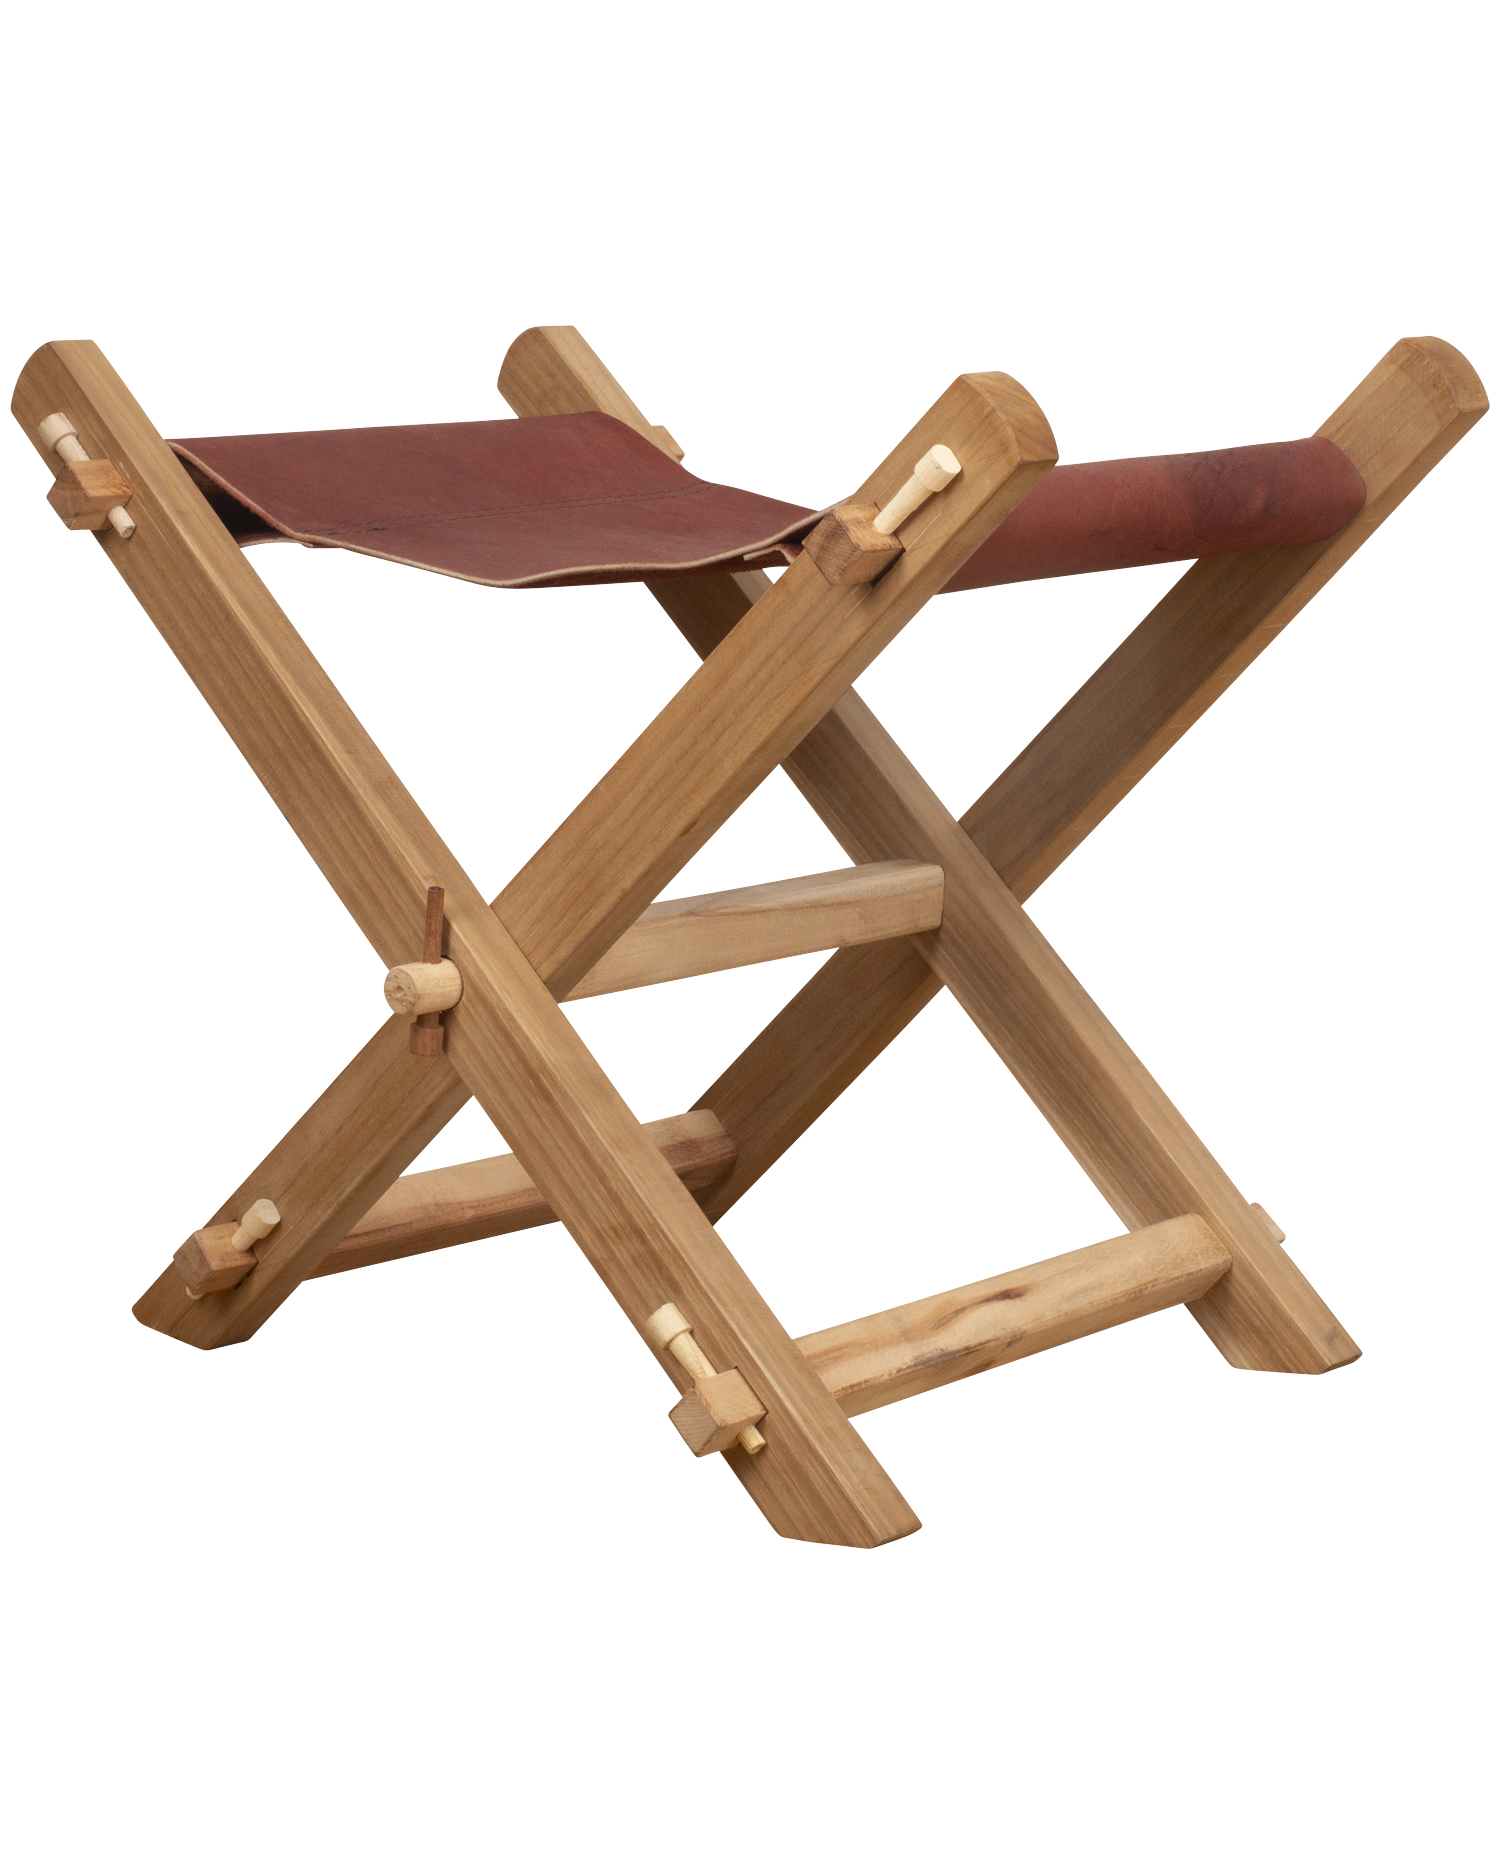 Hannus folding chair